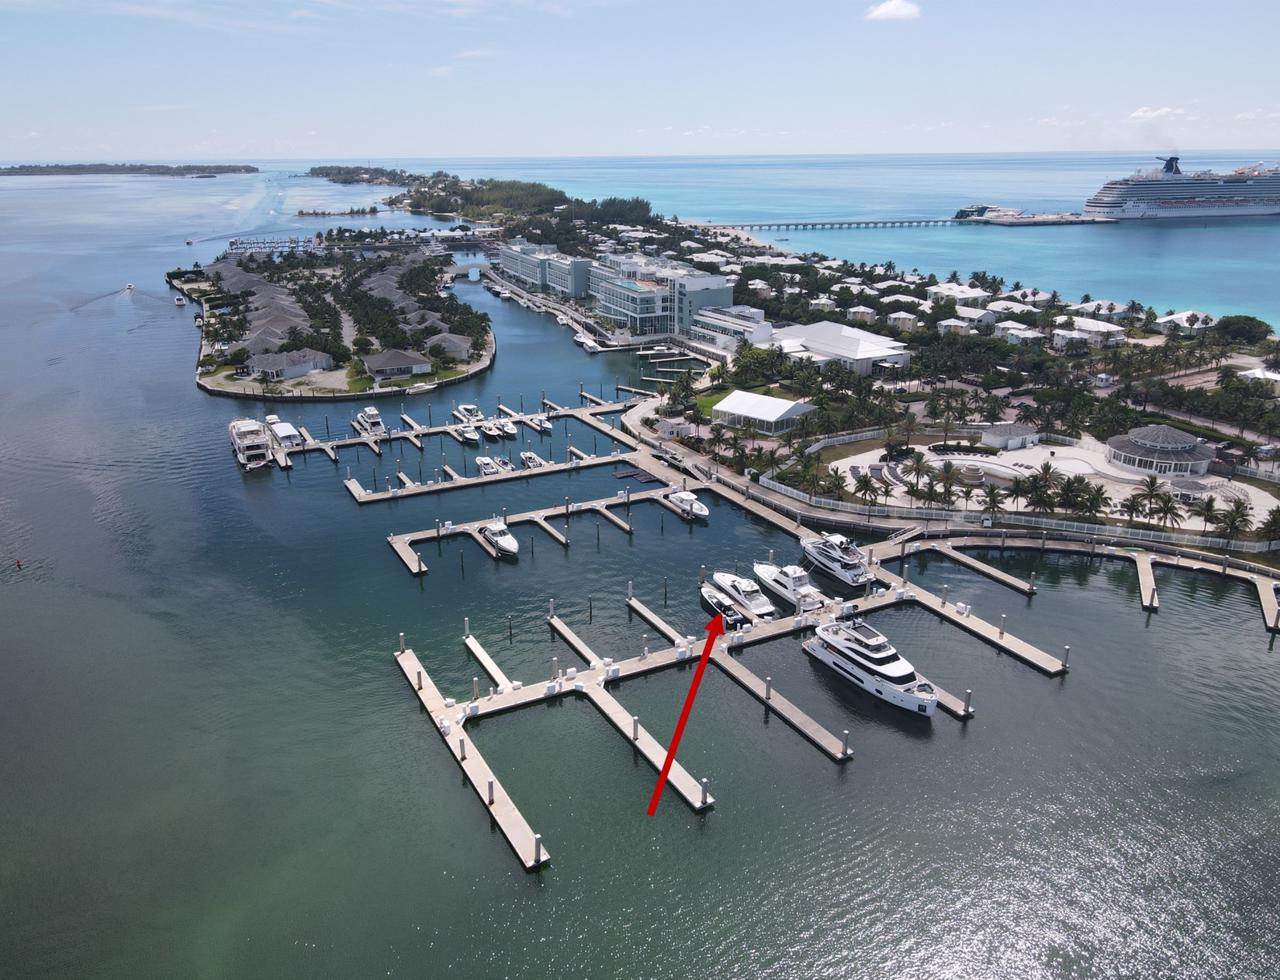 bimini bahamas Dock slip for sale 